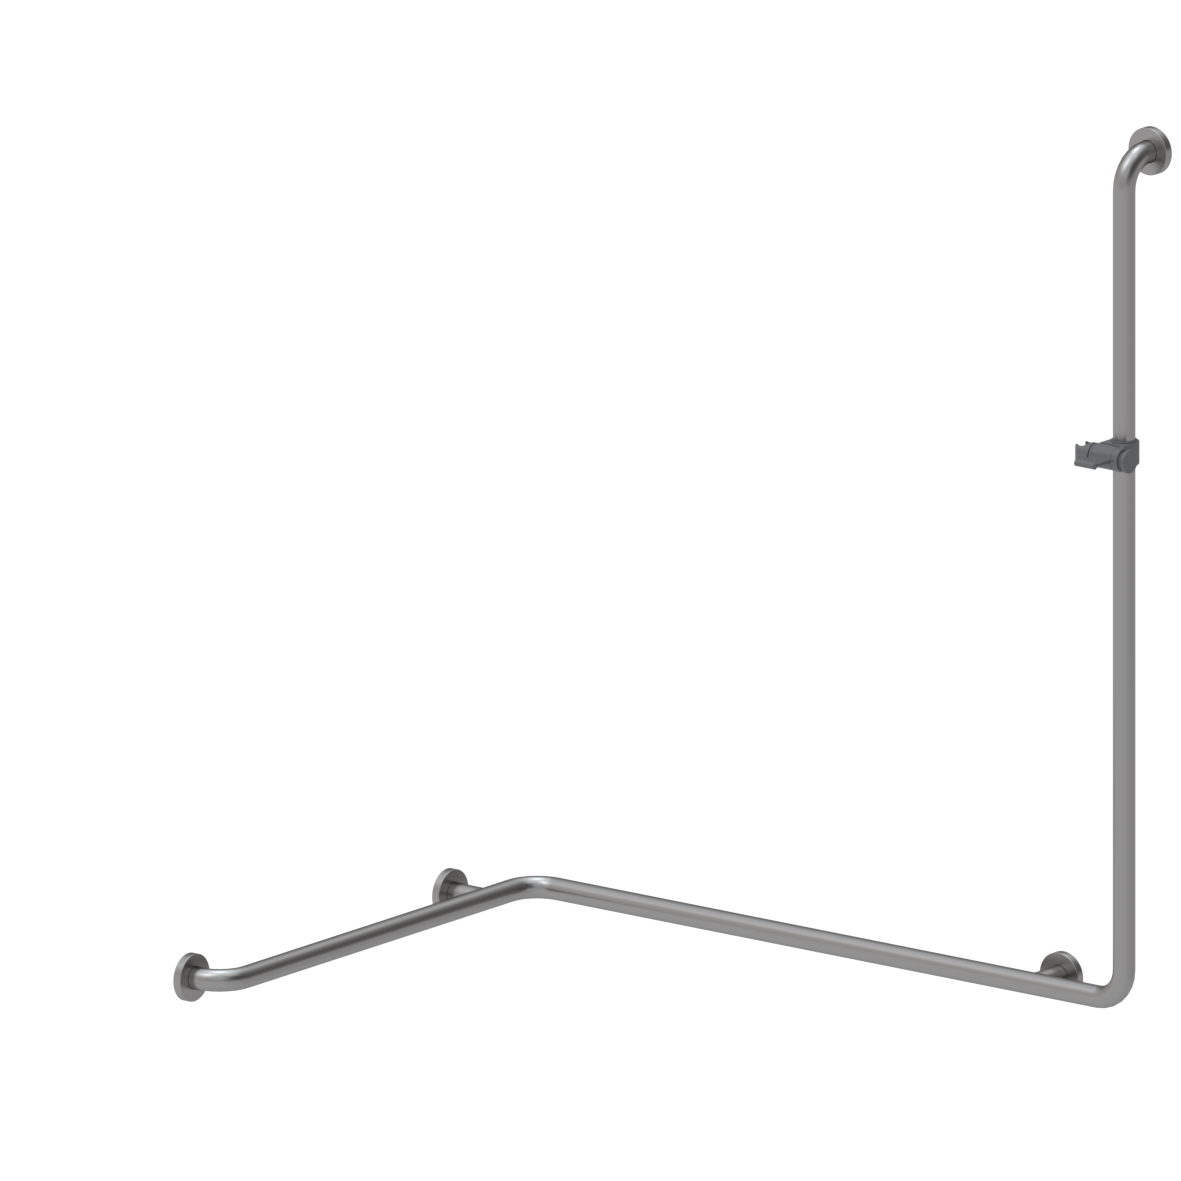 Inox Care Shower handrail, with shower head rail, right, 750 x 1100 x 1200 mm, Stainless steel, shower head holder, colour dark grey (018)